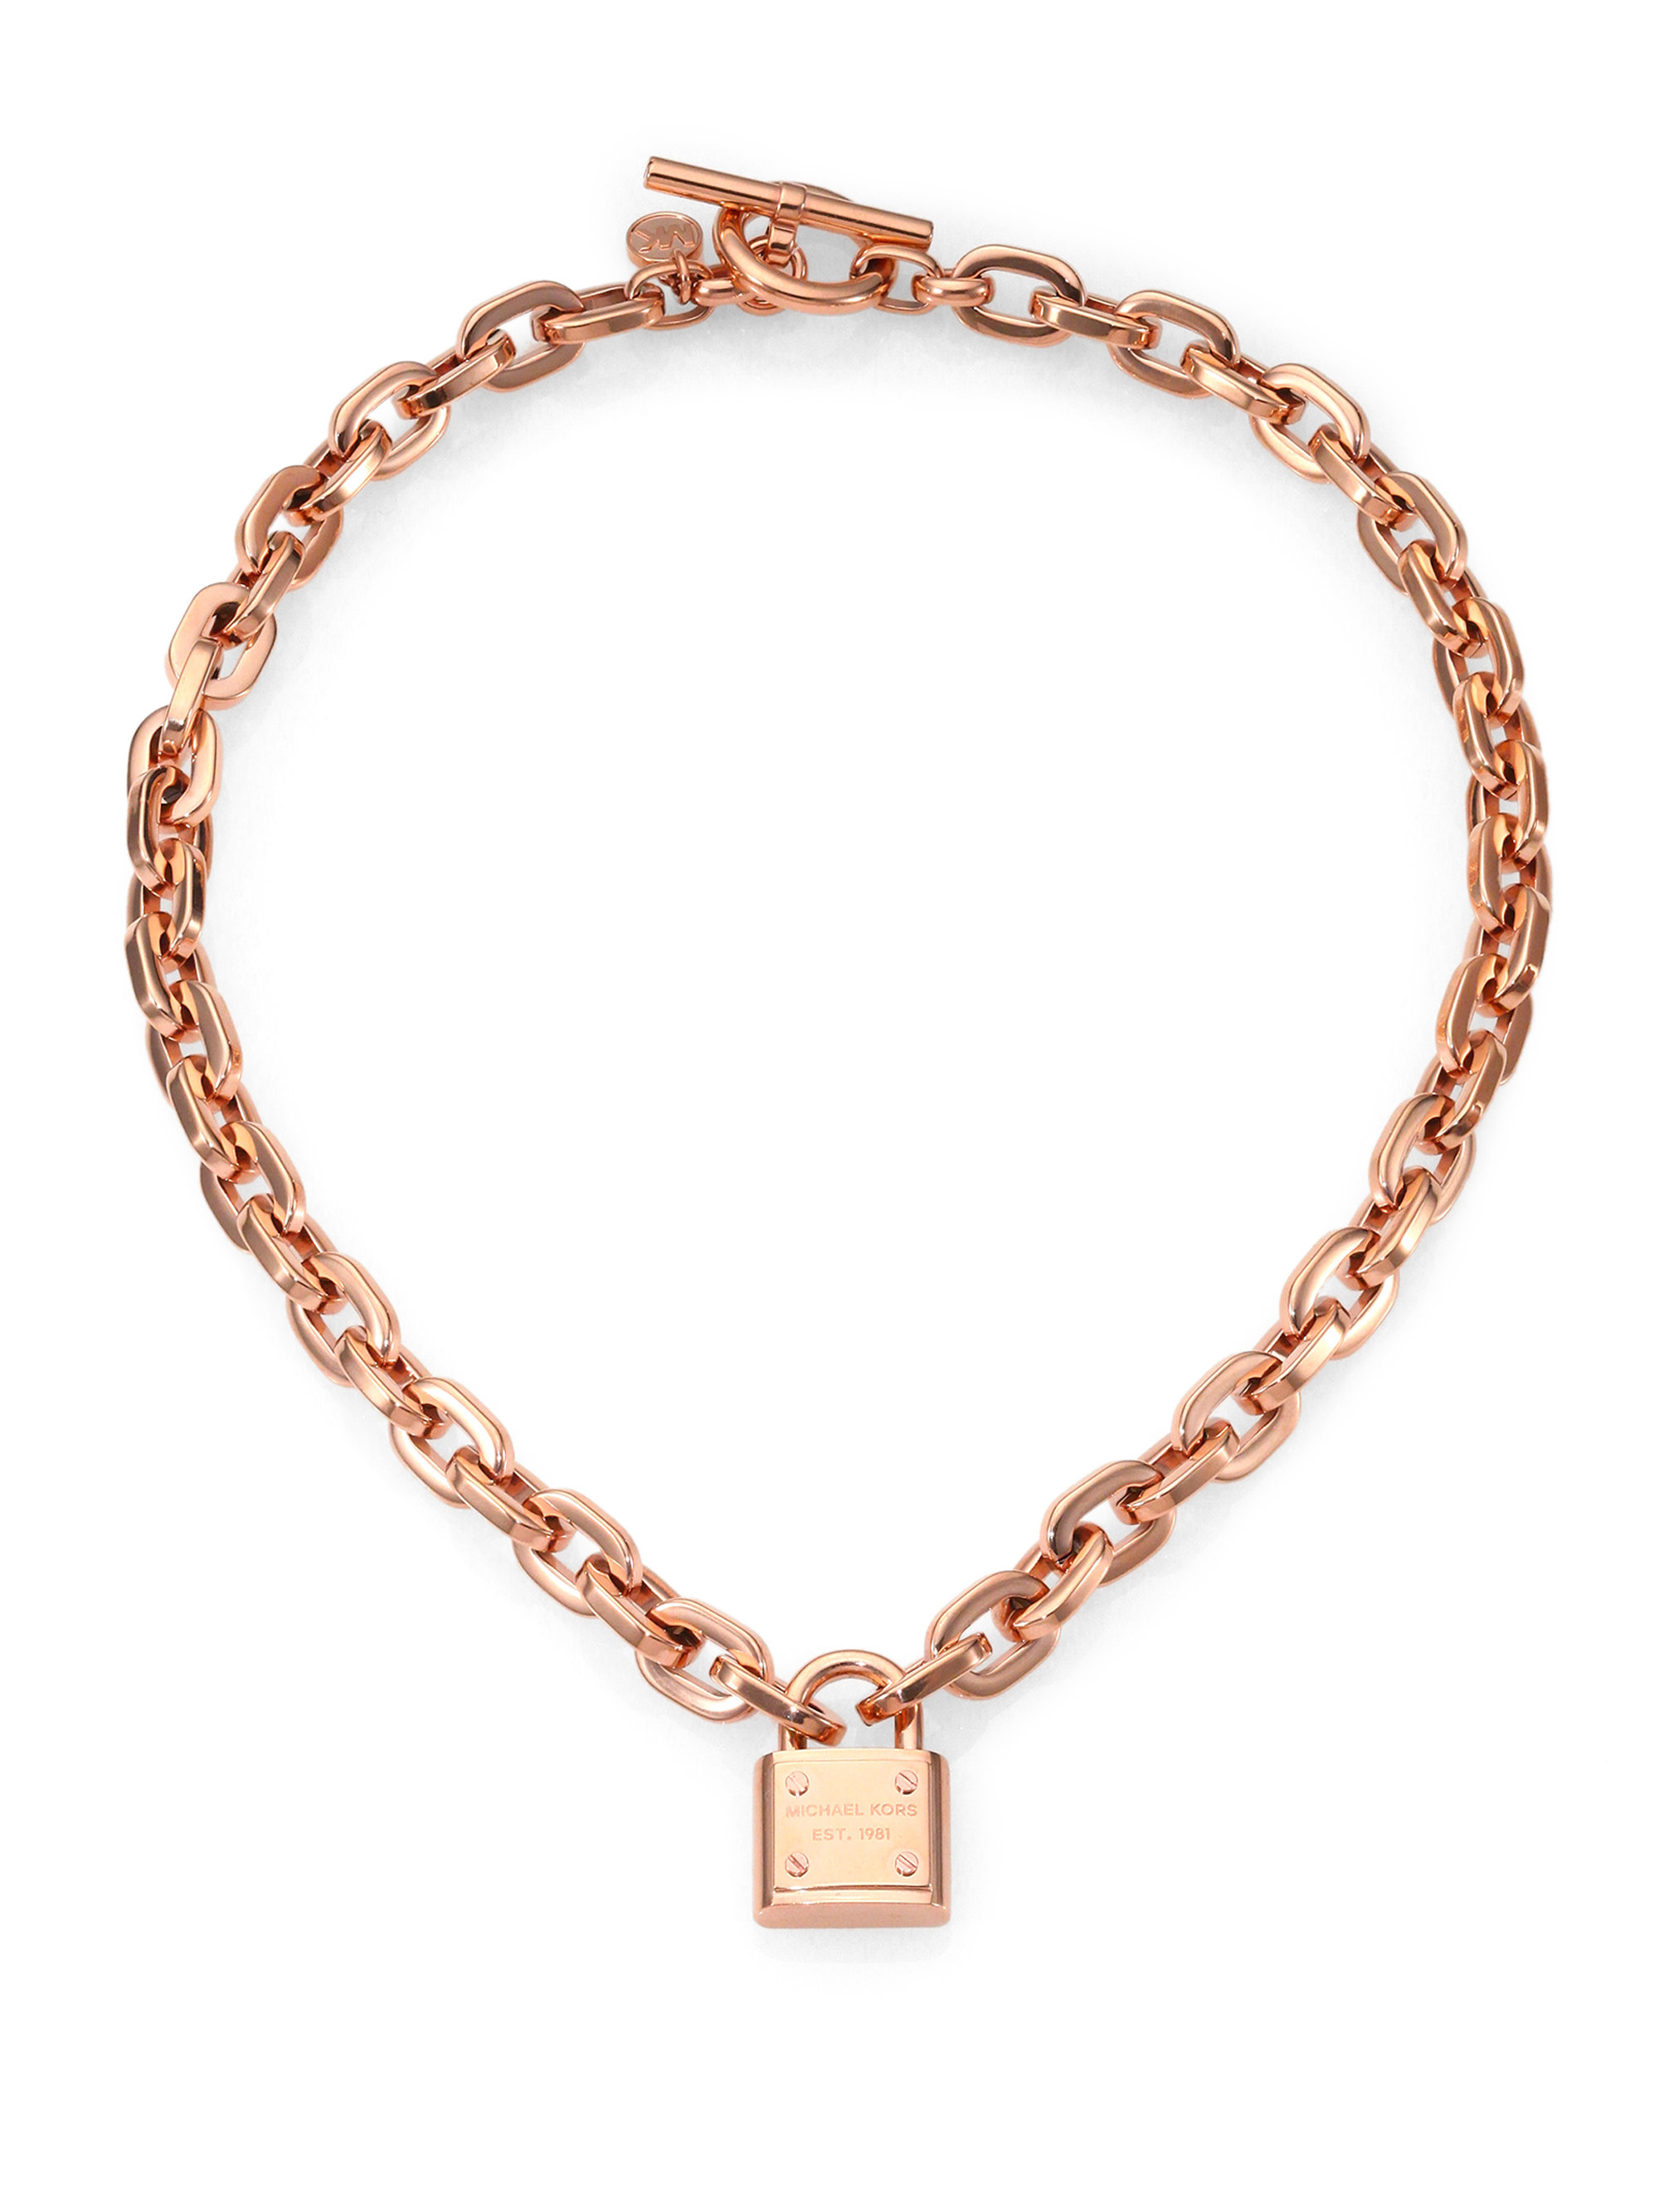 Michael kors Padlock Charm Necklace/rose Goldtone in Metallic | Lyst